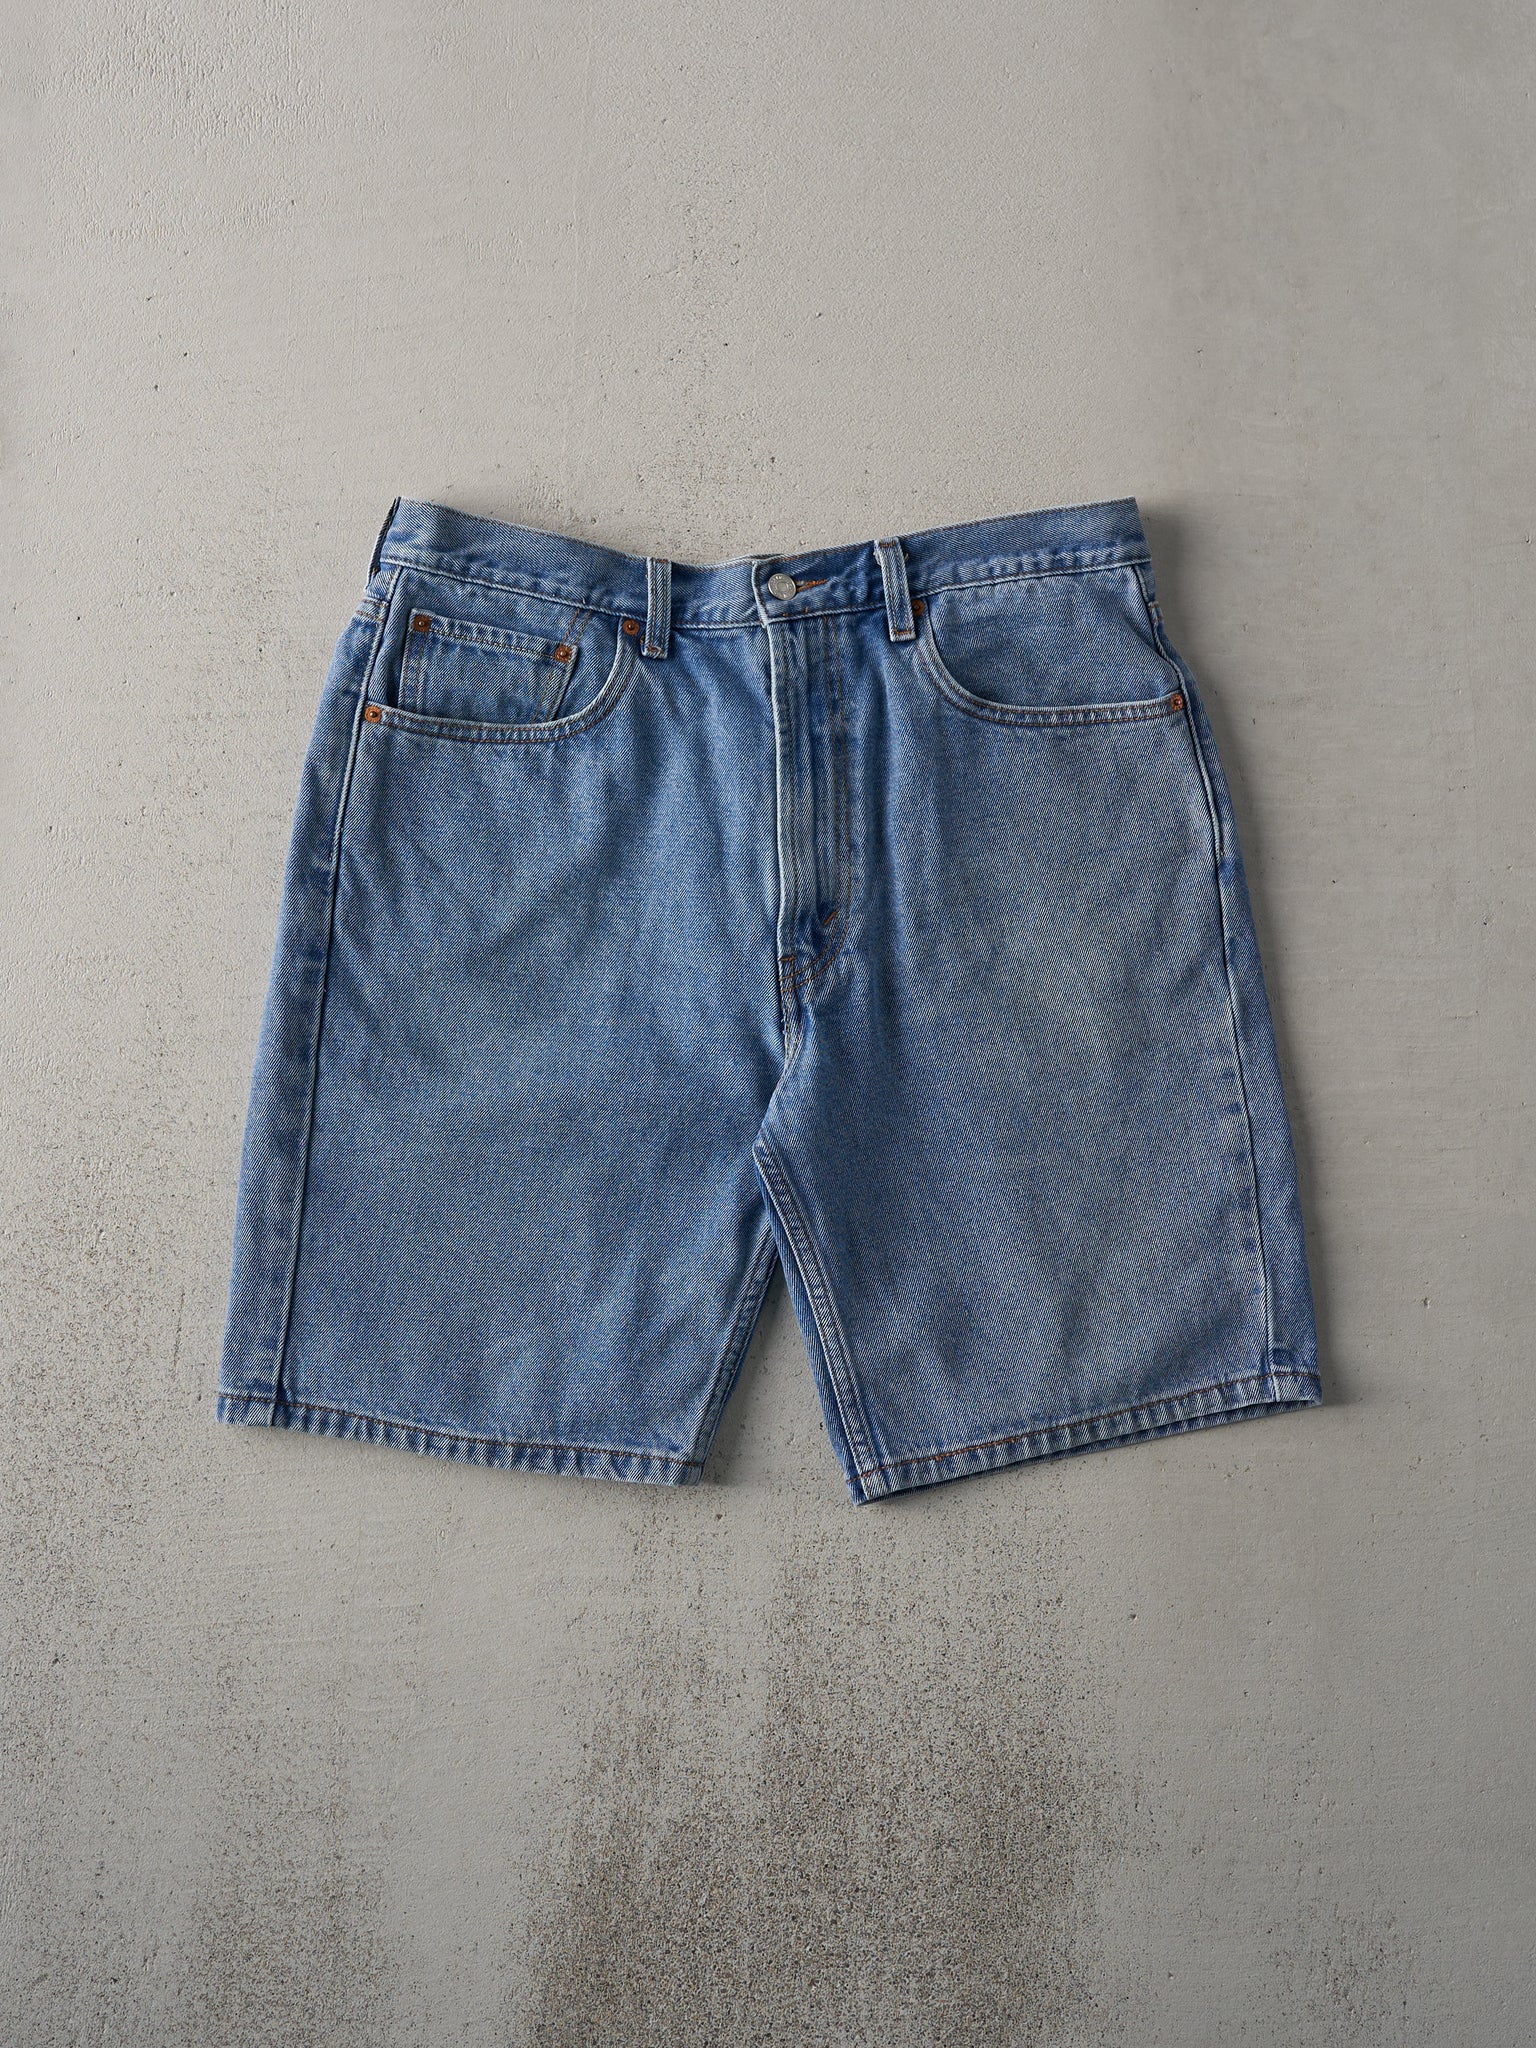 Vintage Y2K Light Wash Levi's 505 Jean Shorts (36x8.5)